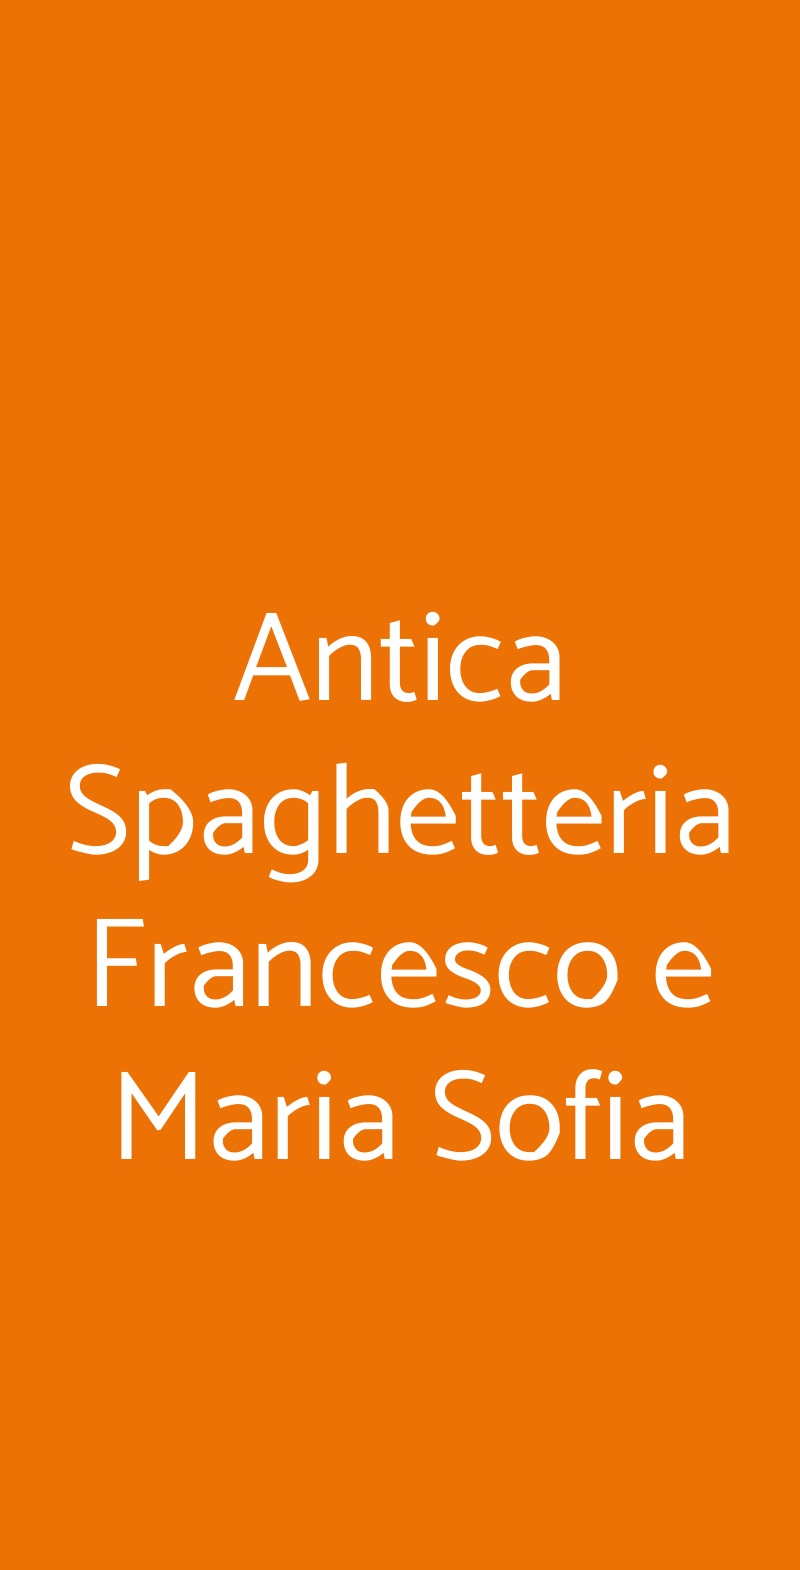 Antica Spaghetteria Francesco e Maria Sofia Napoli menù 1 pagina